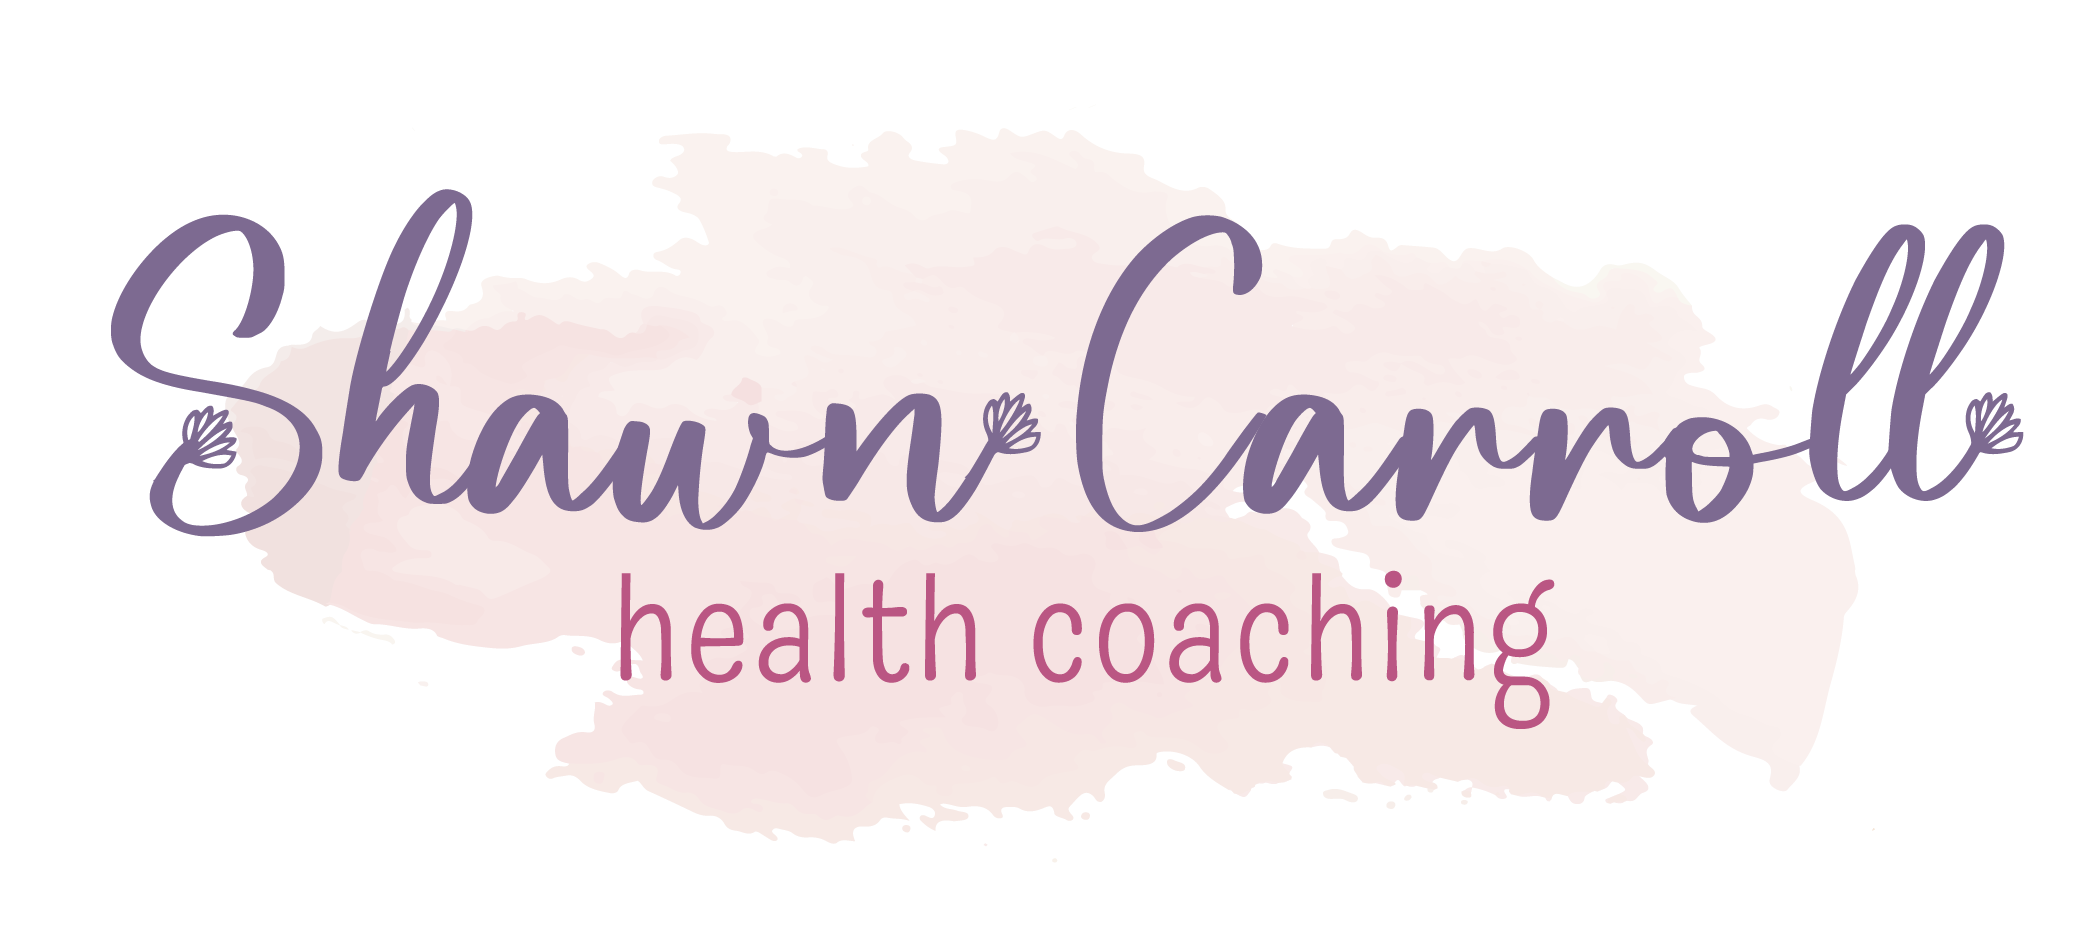 Shawn Carroll Health Coaching